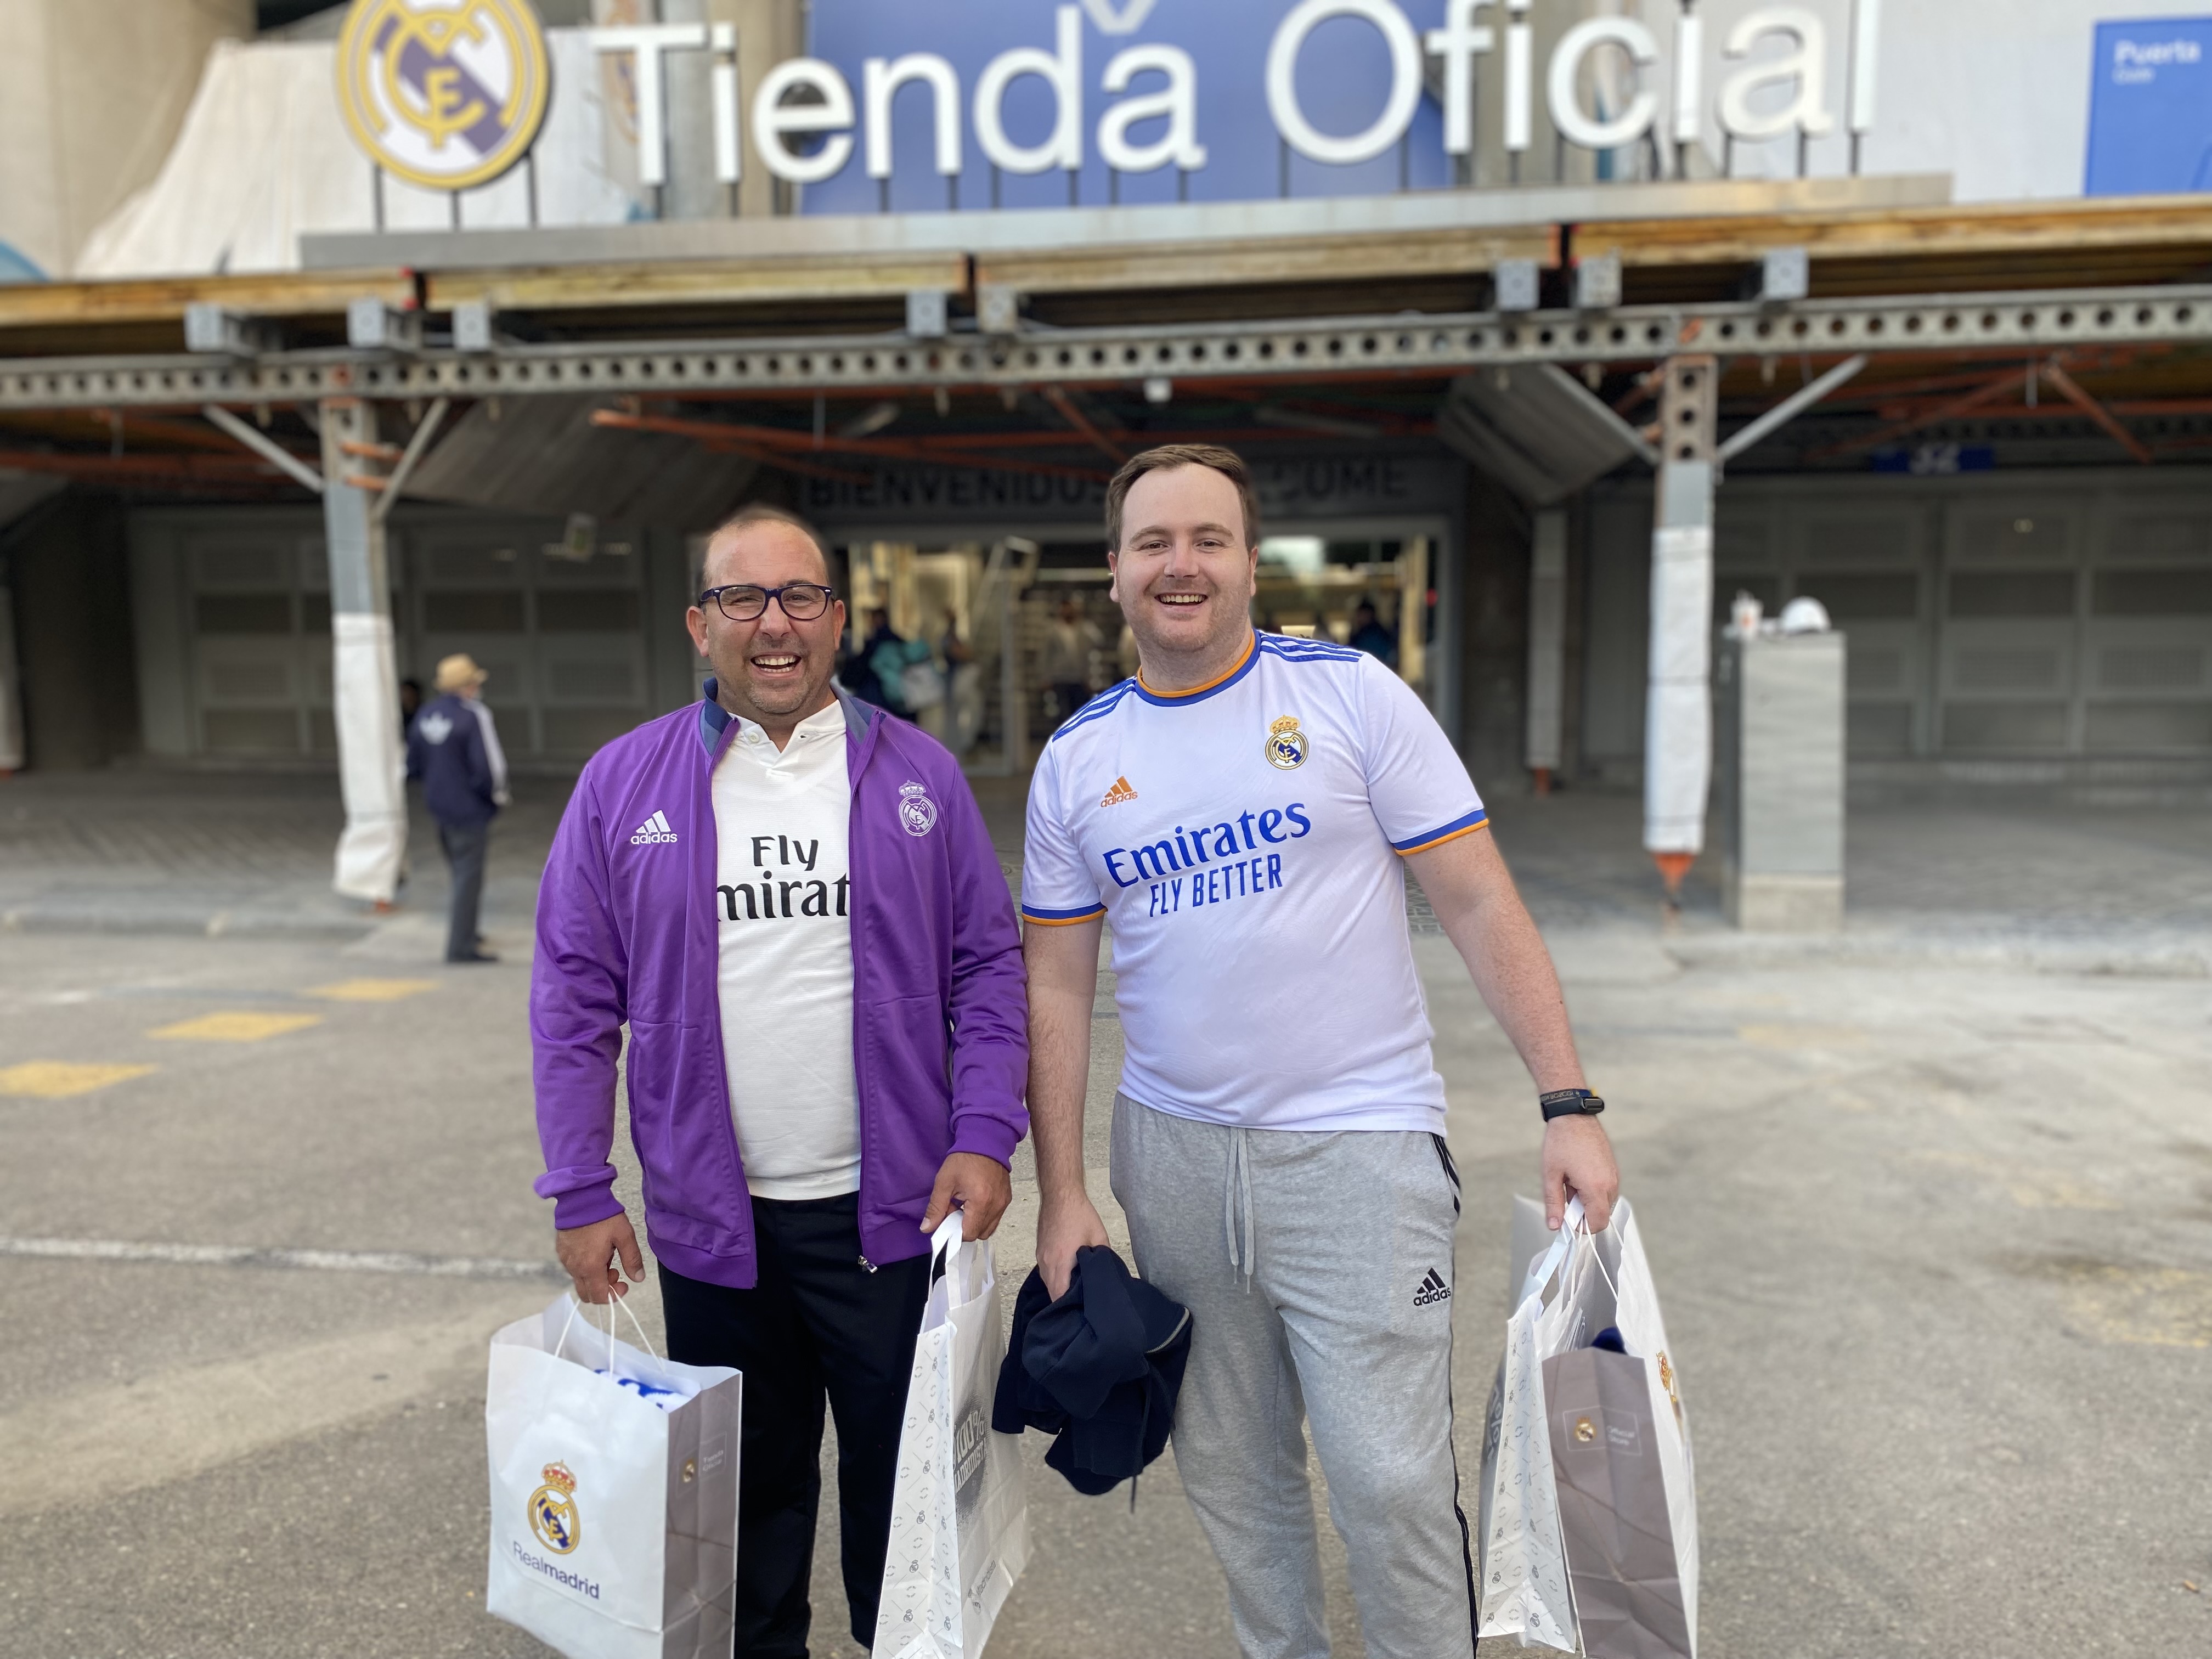 Bufandas - Tienda Oficial Real Madrid - Real Madrid CF